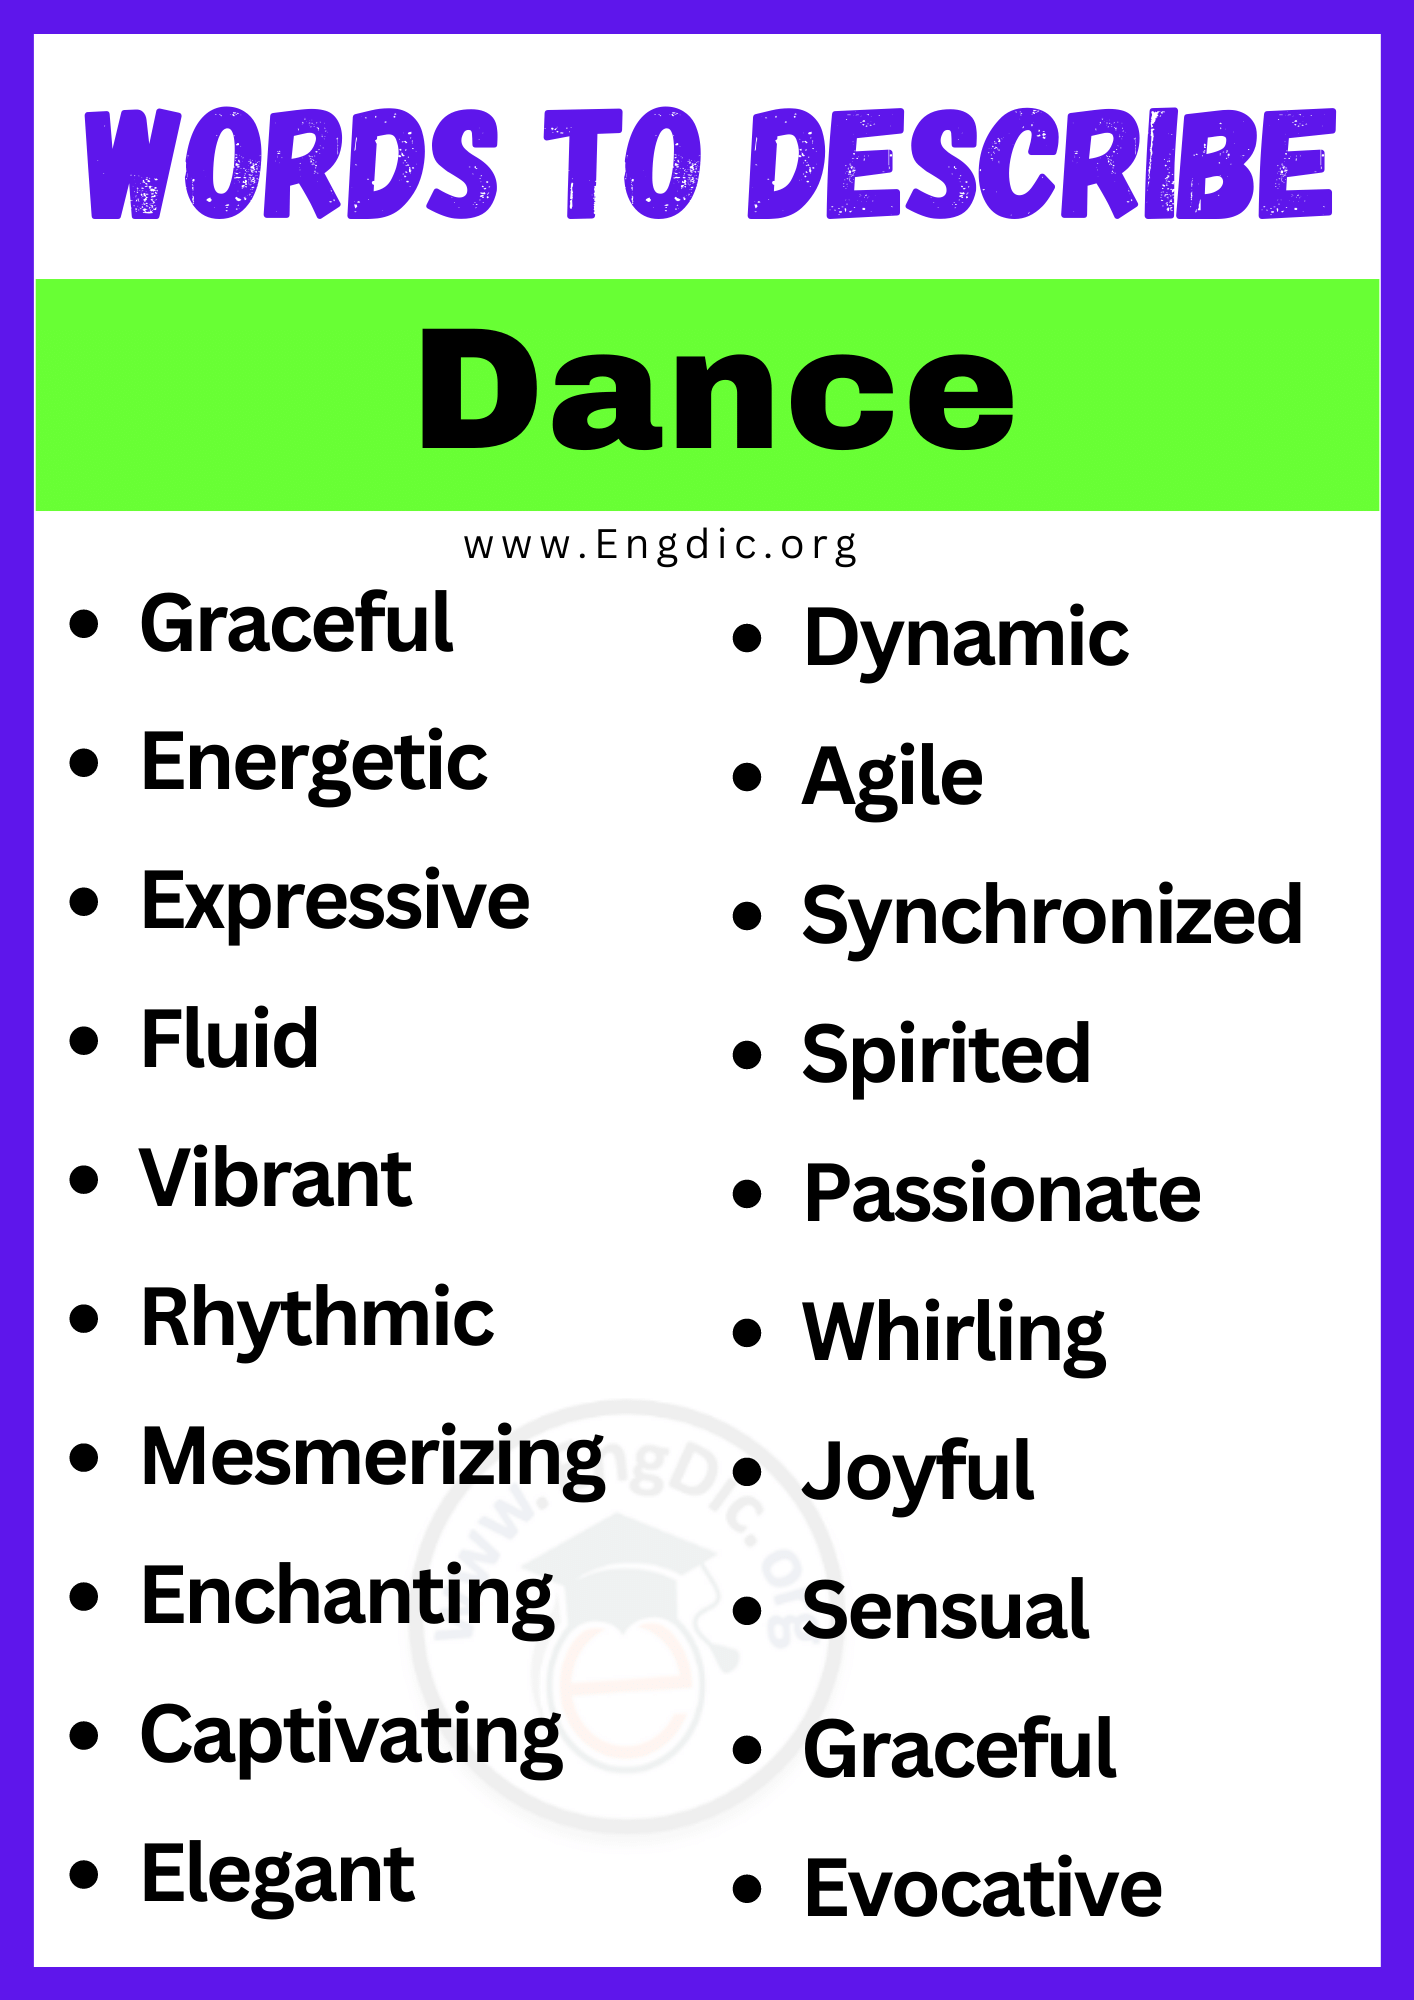 Words to Describe Dance